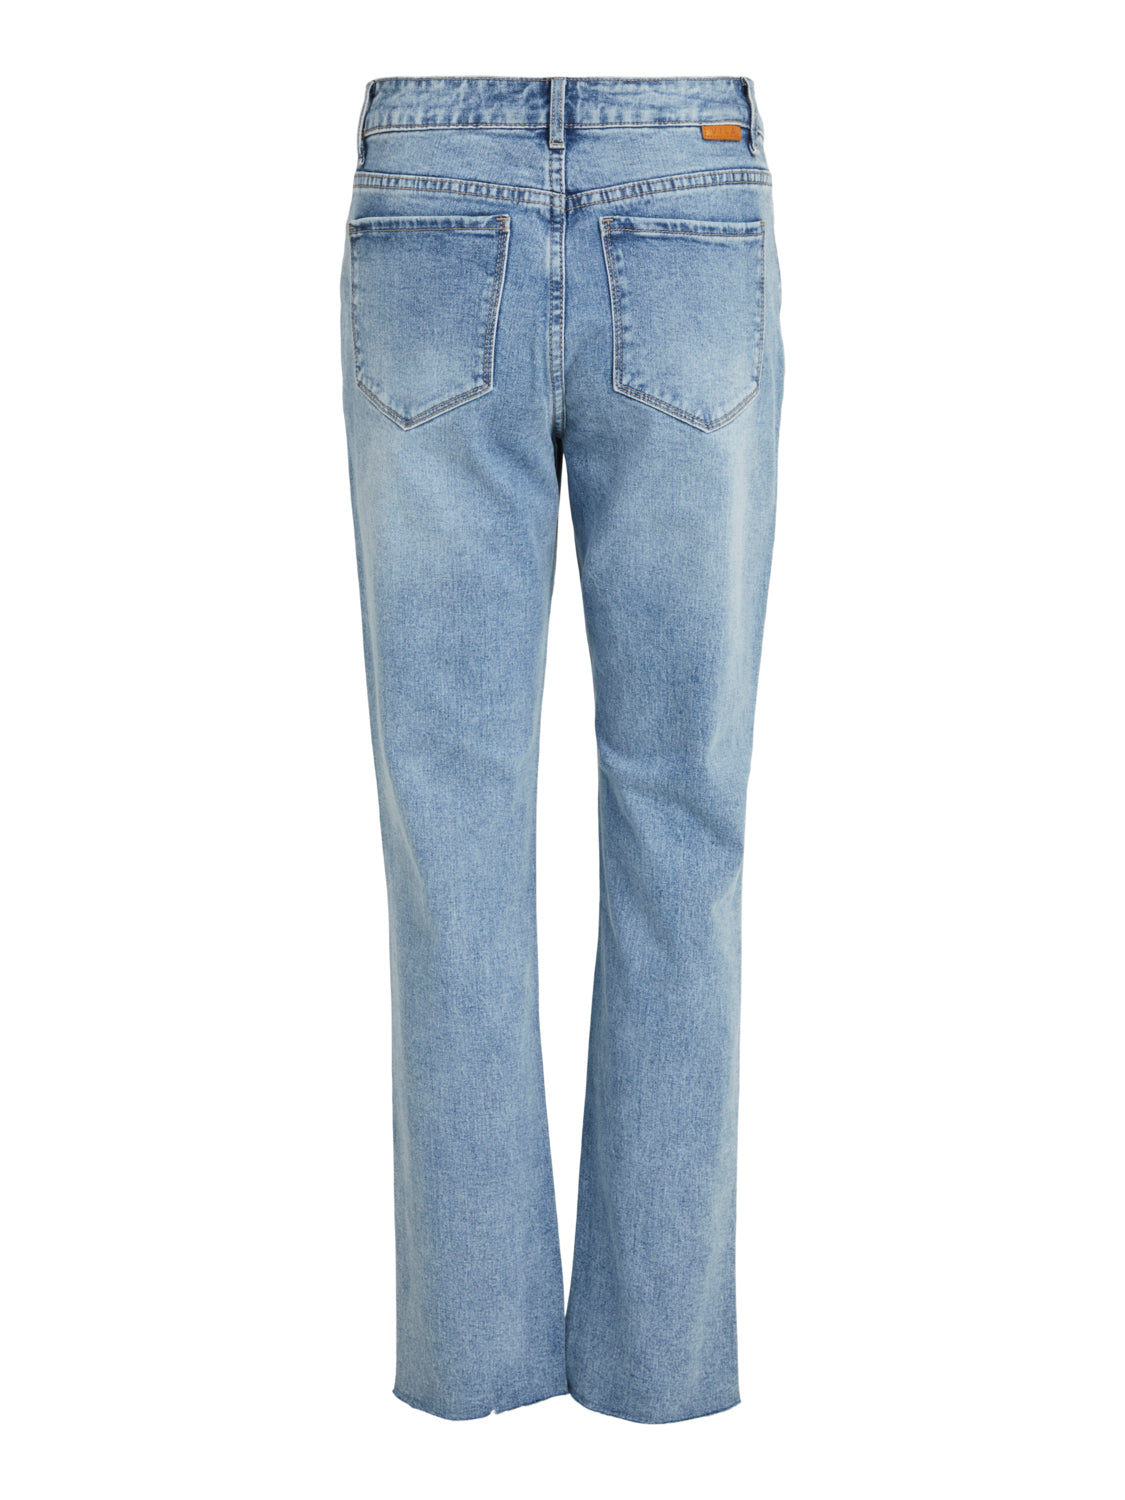 VISTRAY Jeans - Light Blue Denim